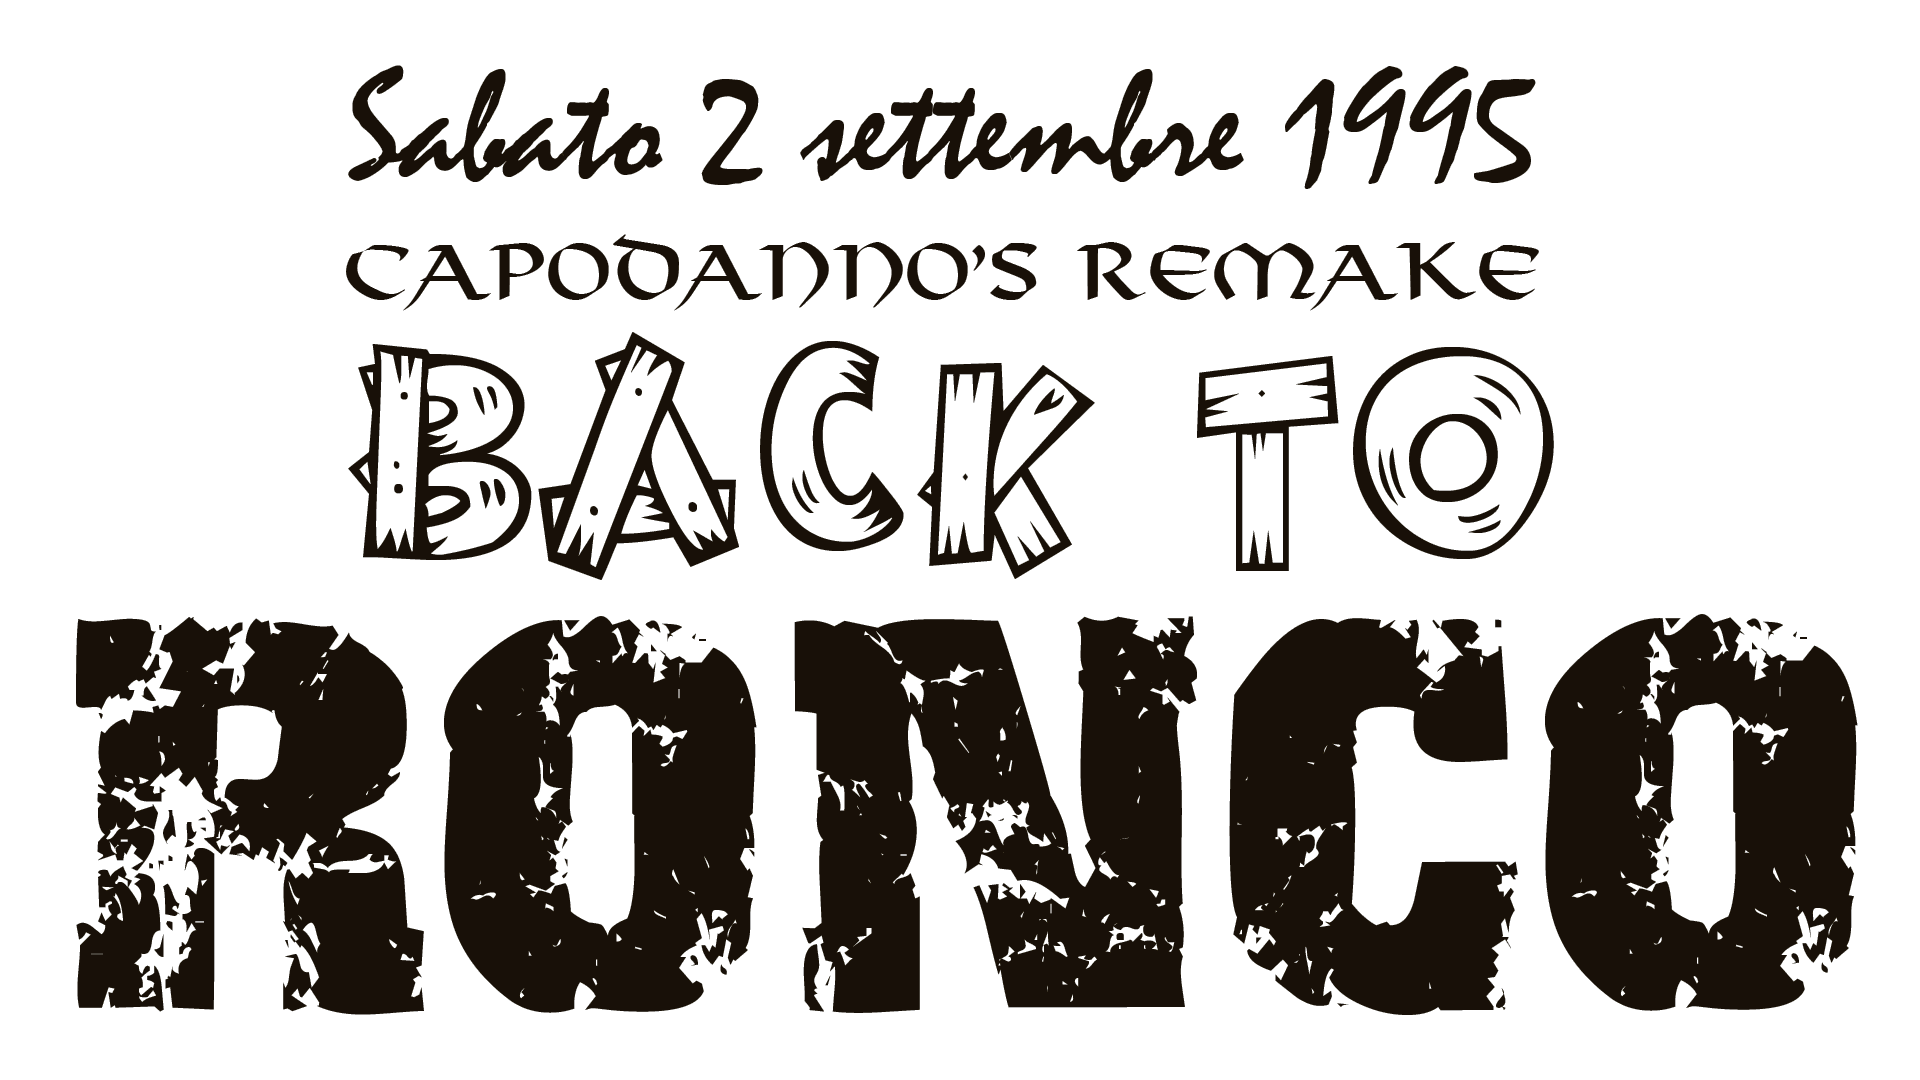 Back to Ronco - Sabato 2/9/1995